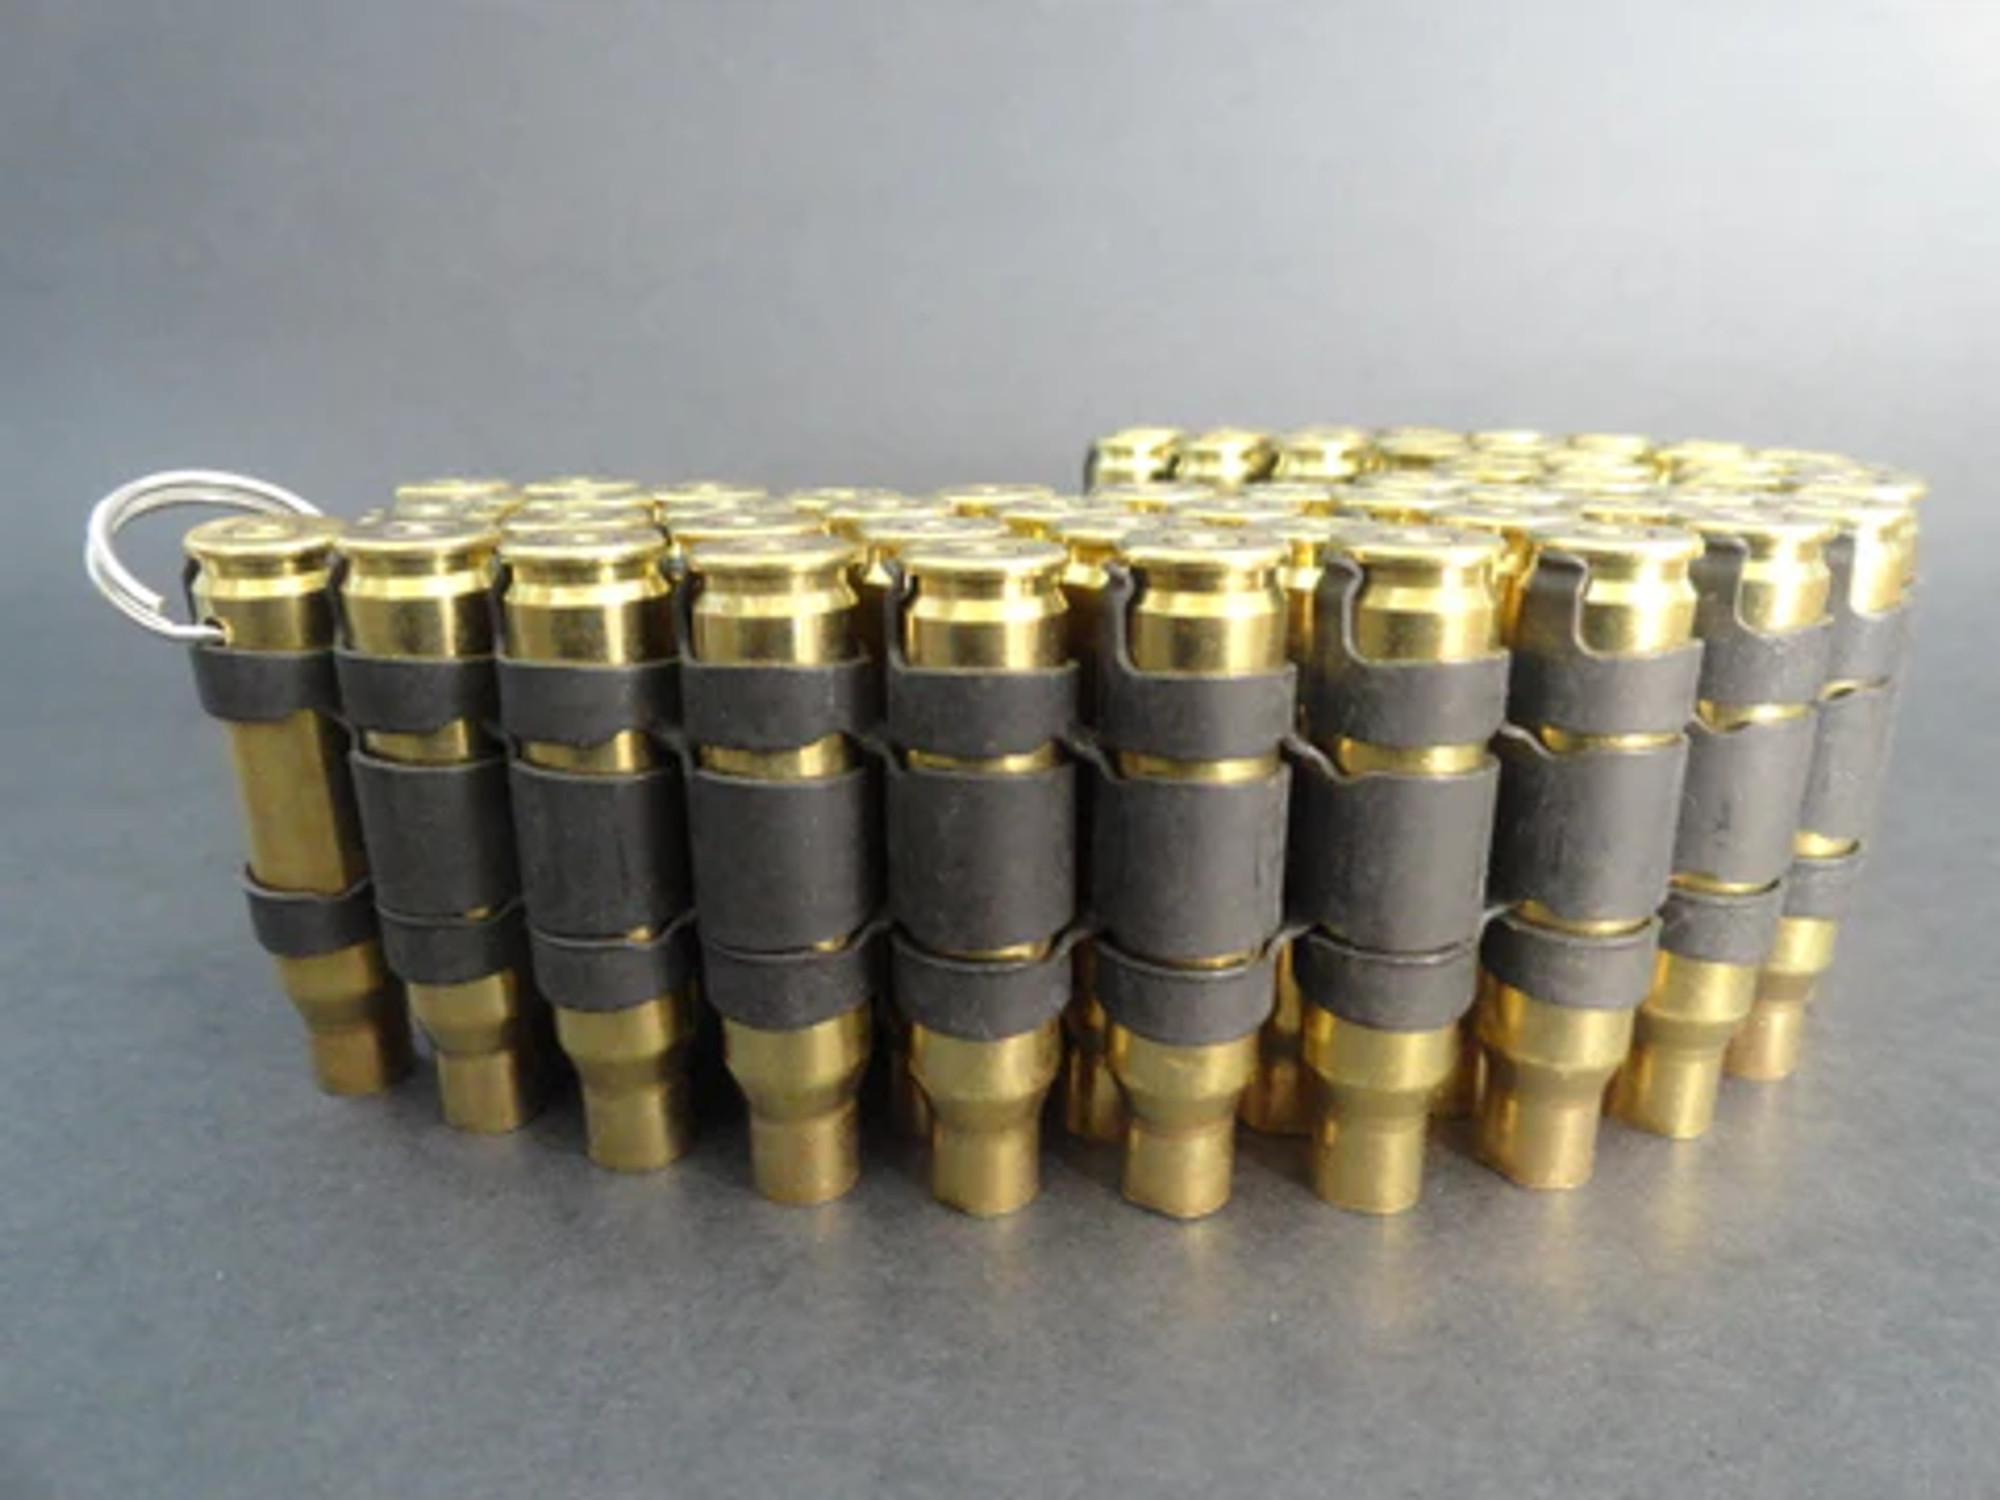 .308 Caliber Bullet Belt - No Tips - Brass Casing/Black Links